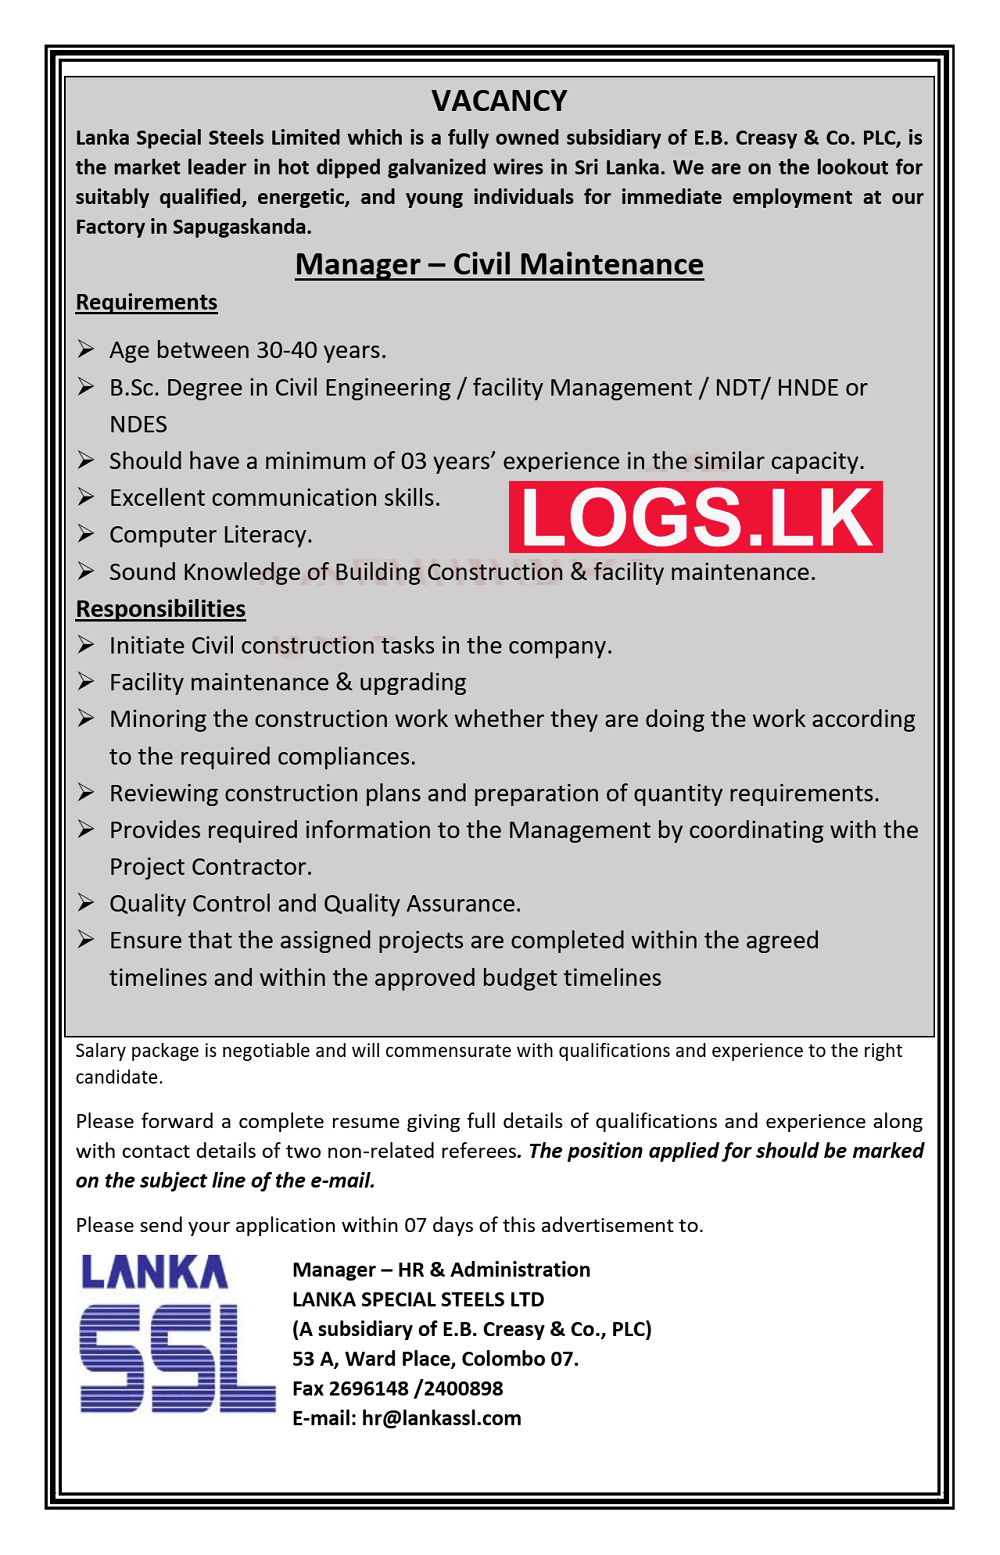 Manager - Civil Maintenance Vacancy at Lanka Special Steels (Pvt) Ltd Job Vacancies